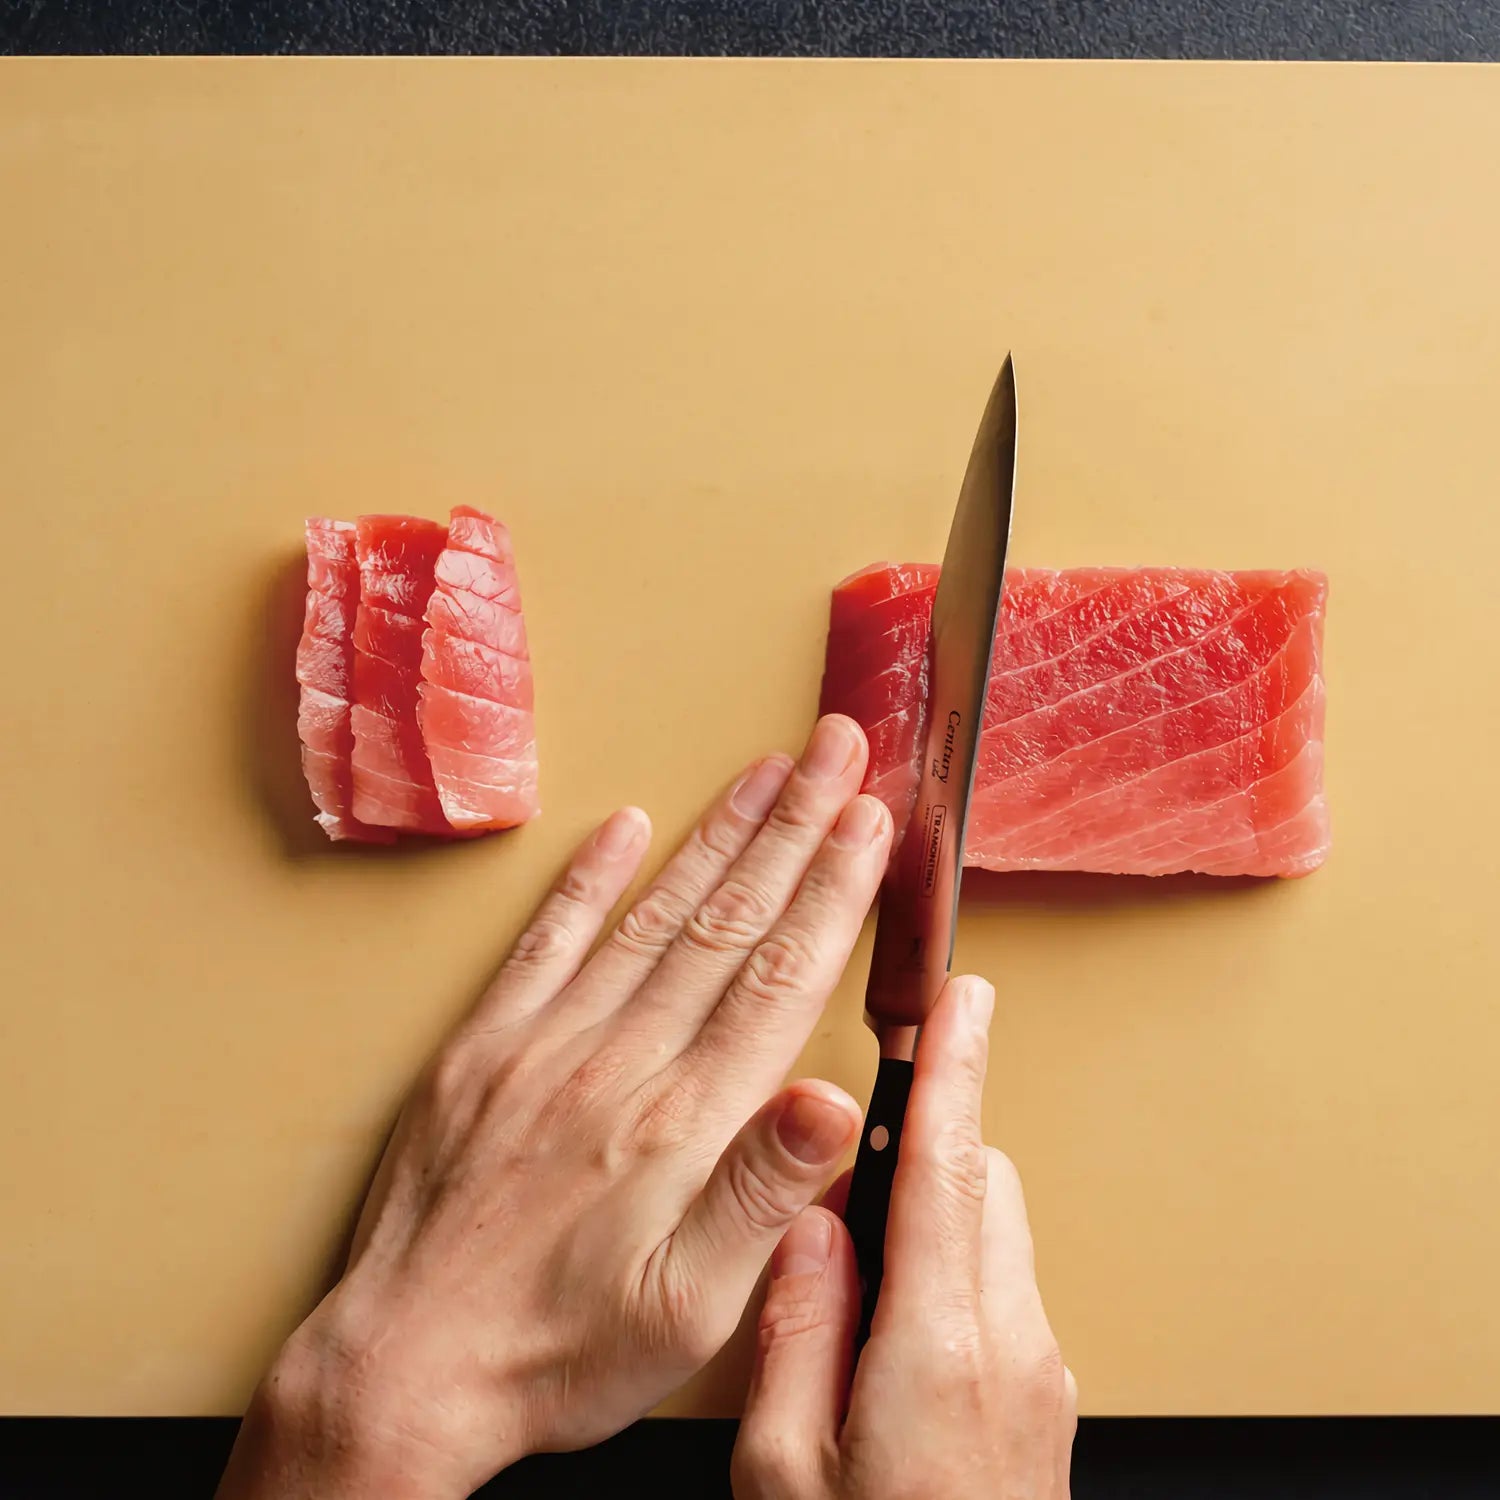 Asahi black synthetic rubber cutting board – Zahocho Knives Tokyo